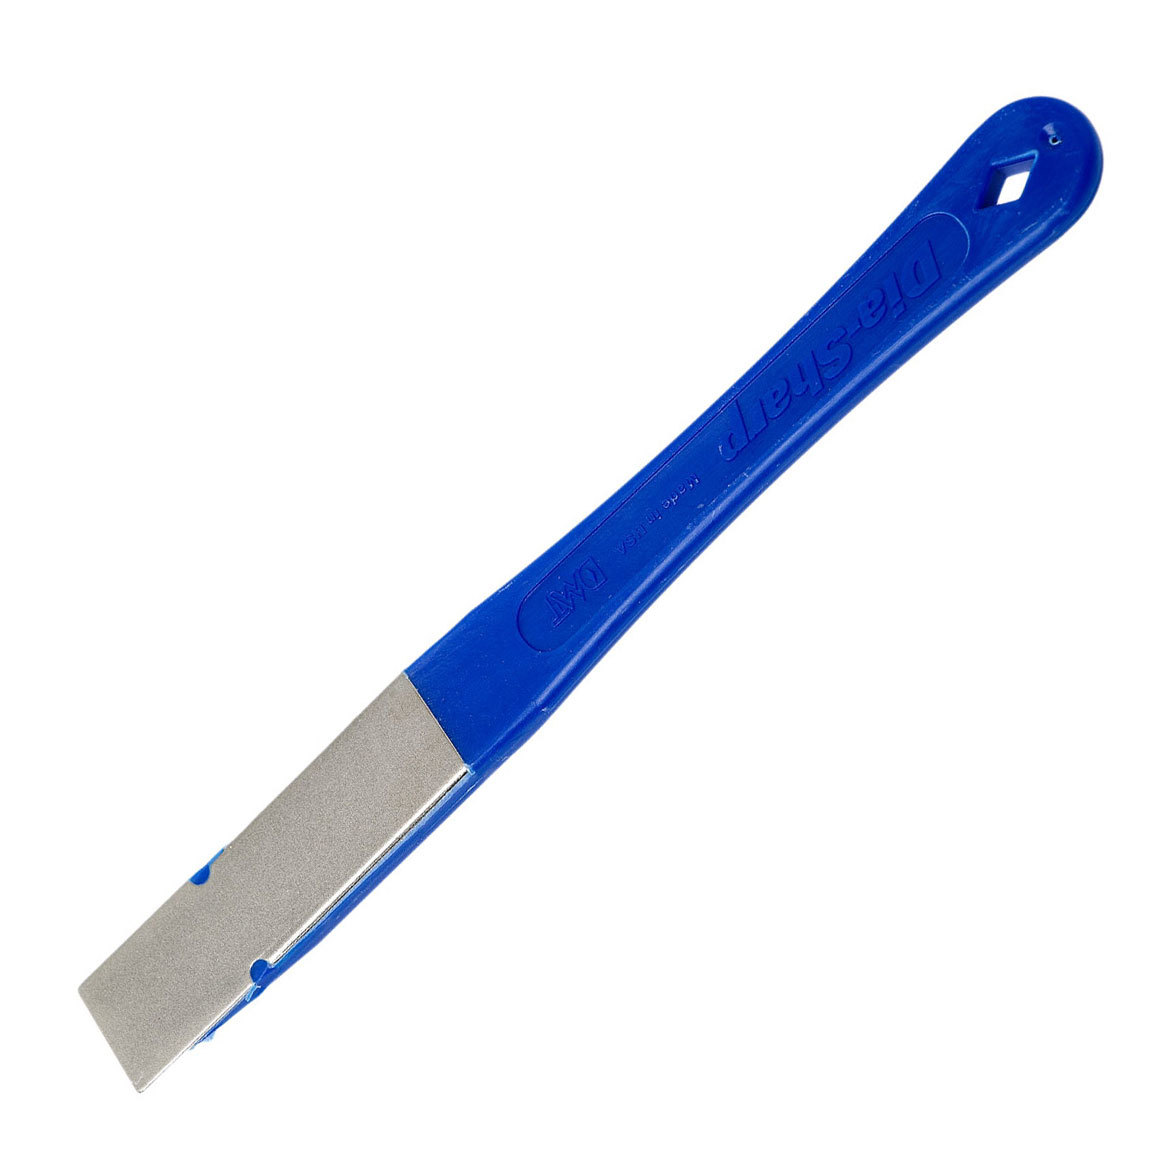 Алмазная точилка для ножей DMT® Coarse, 325 mesh, 45 micron электрическая алмазная точилка для ножей точилкин t 35